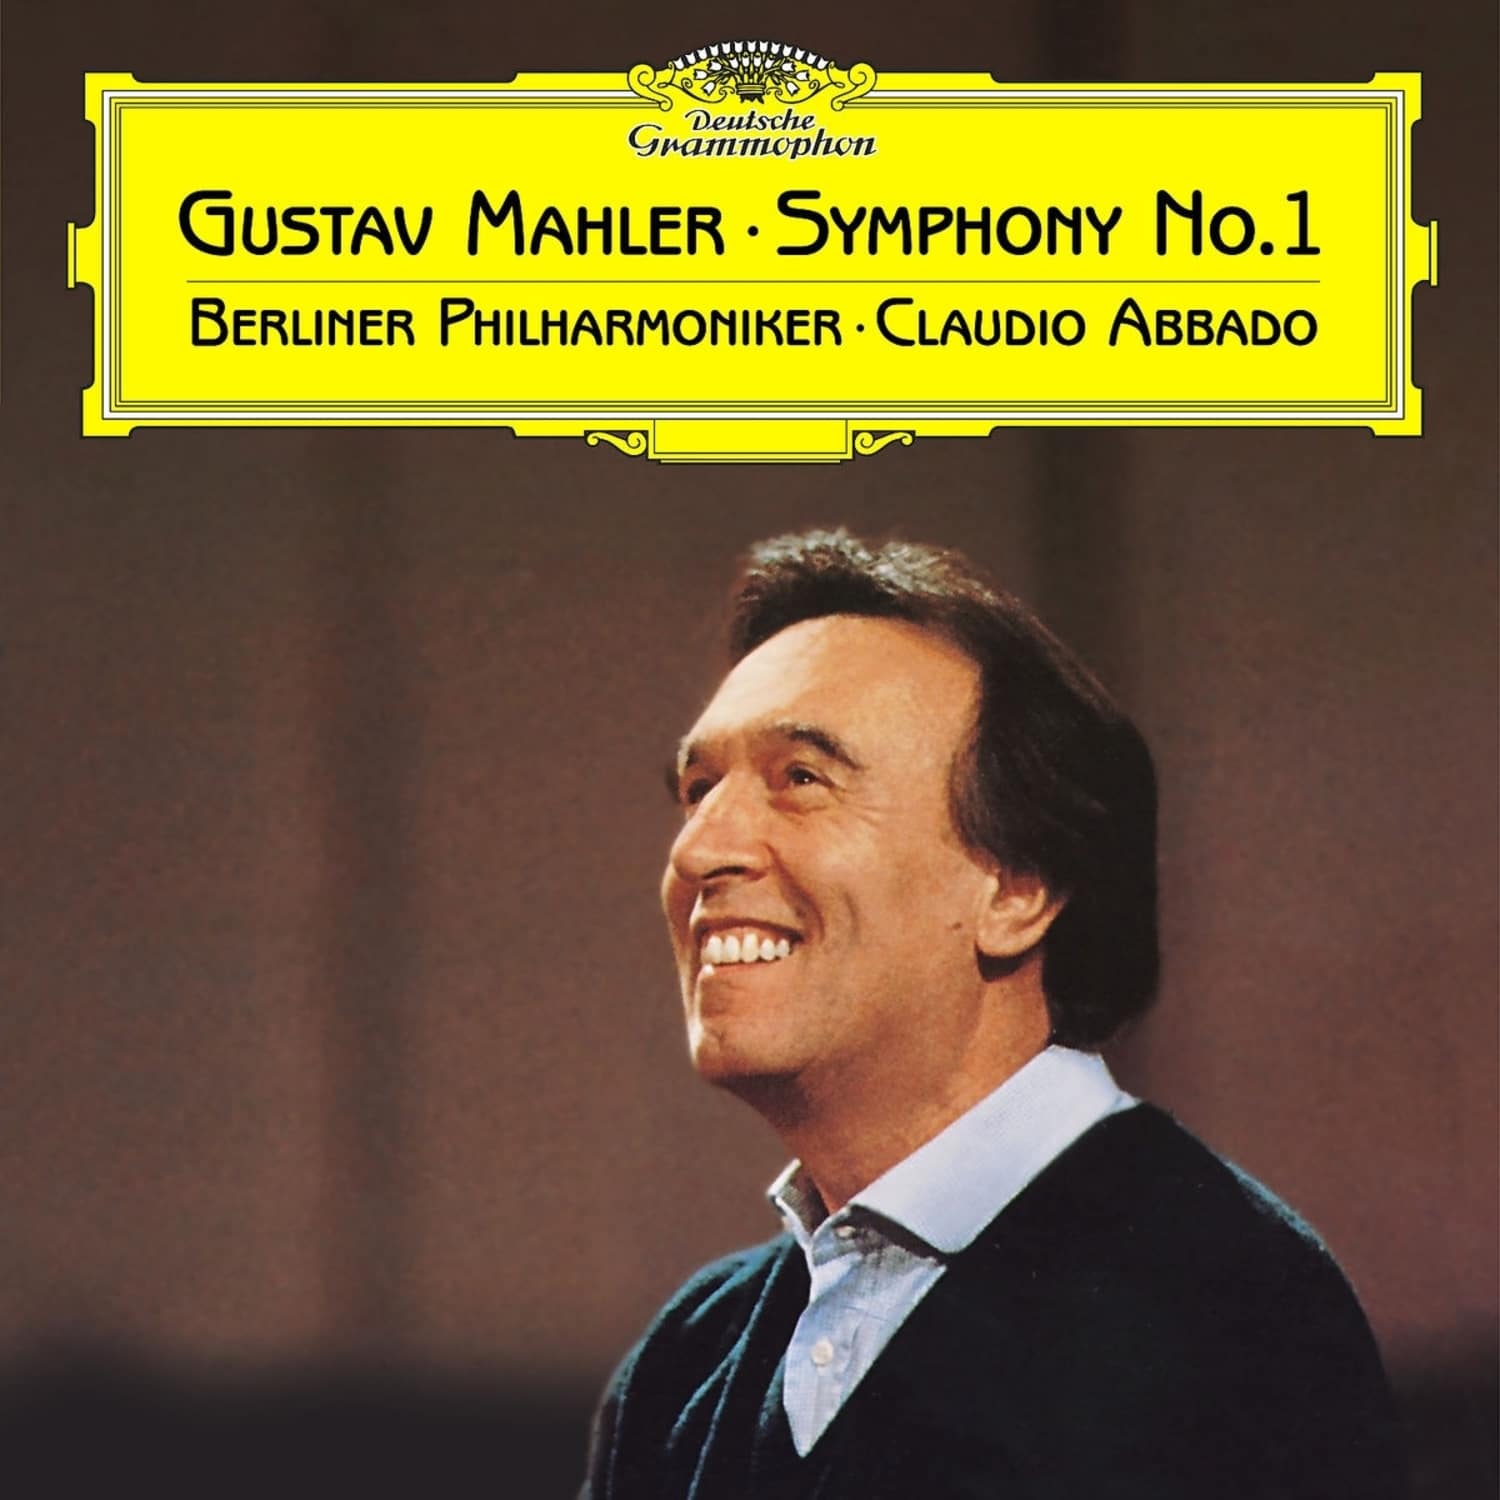 Claudio/Berliner Philharmoniker Abbado / Gustav Mahler - GUSTAV MAHLER: SINFONIE 1 